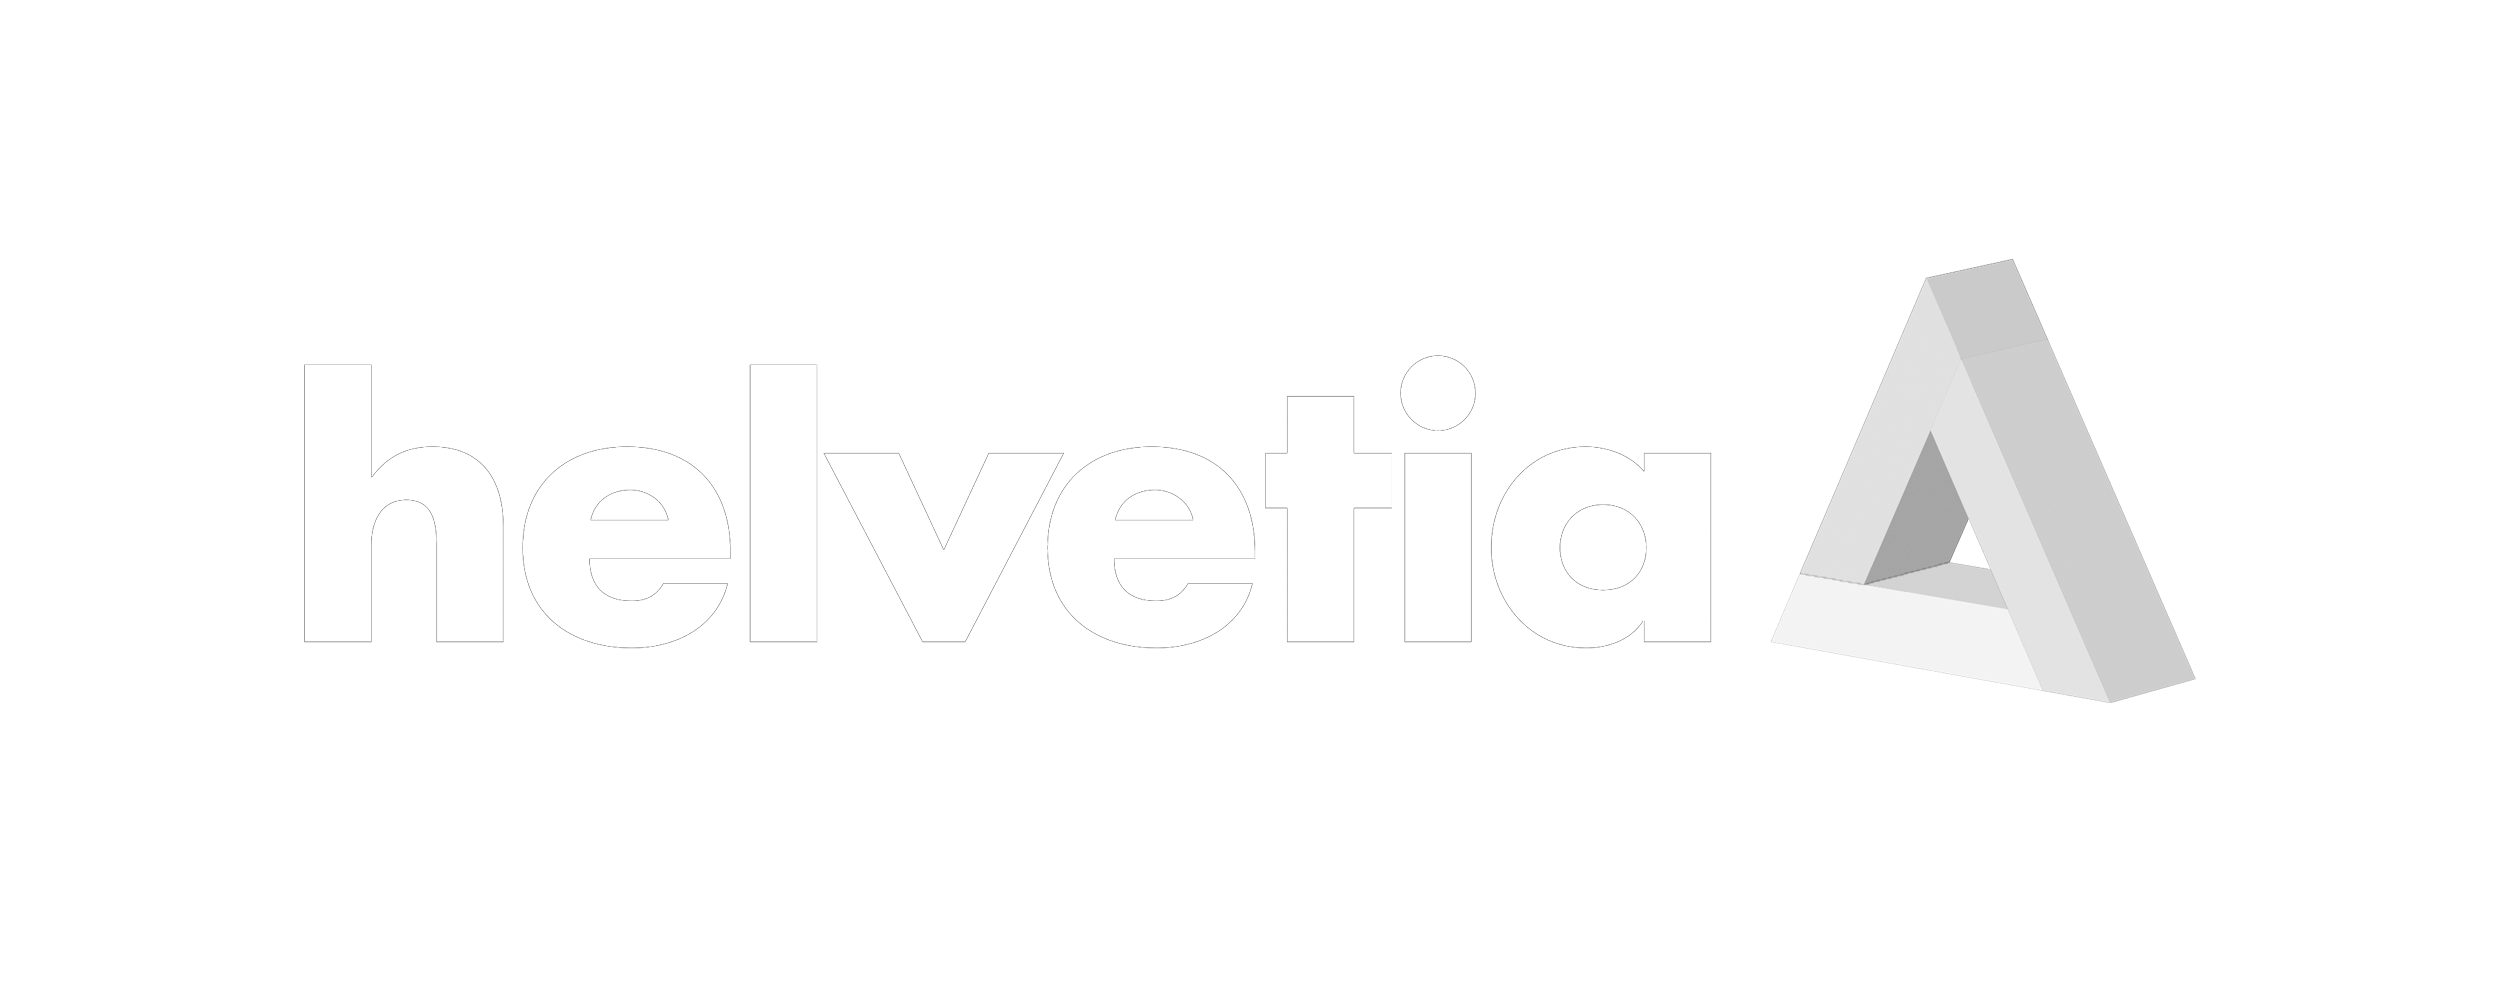 Helvetia Logo